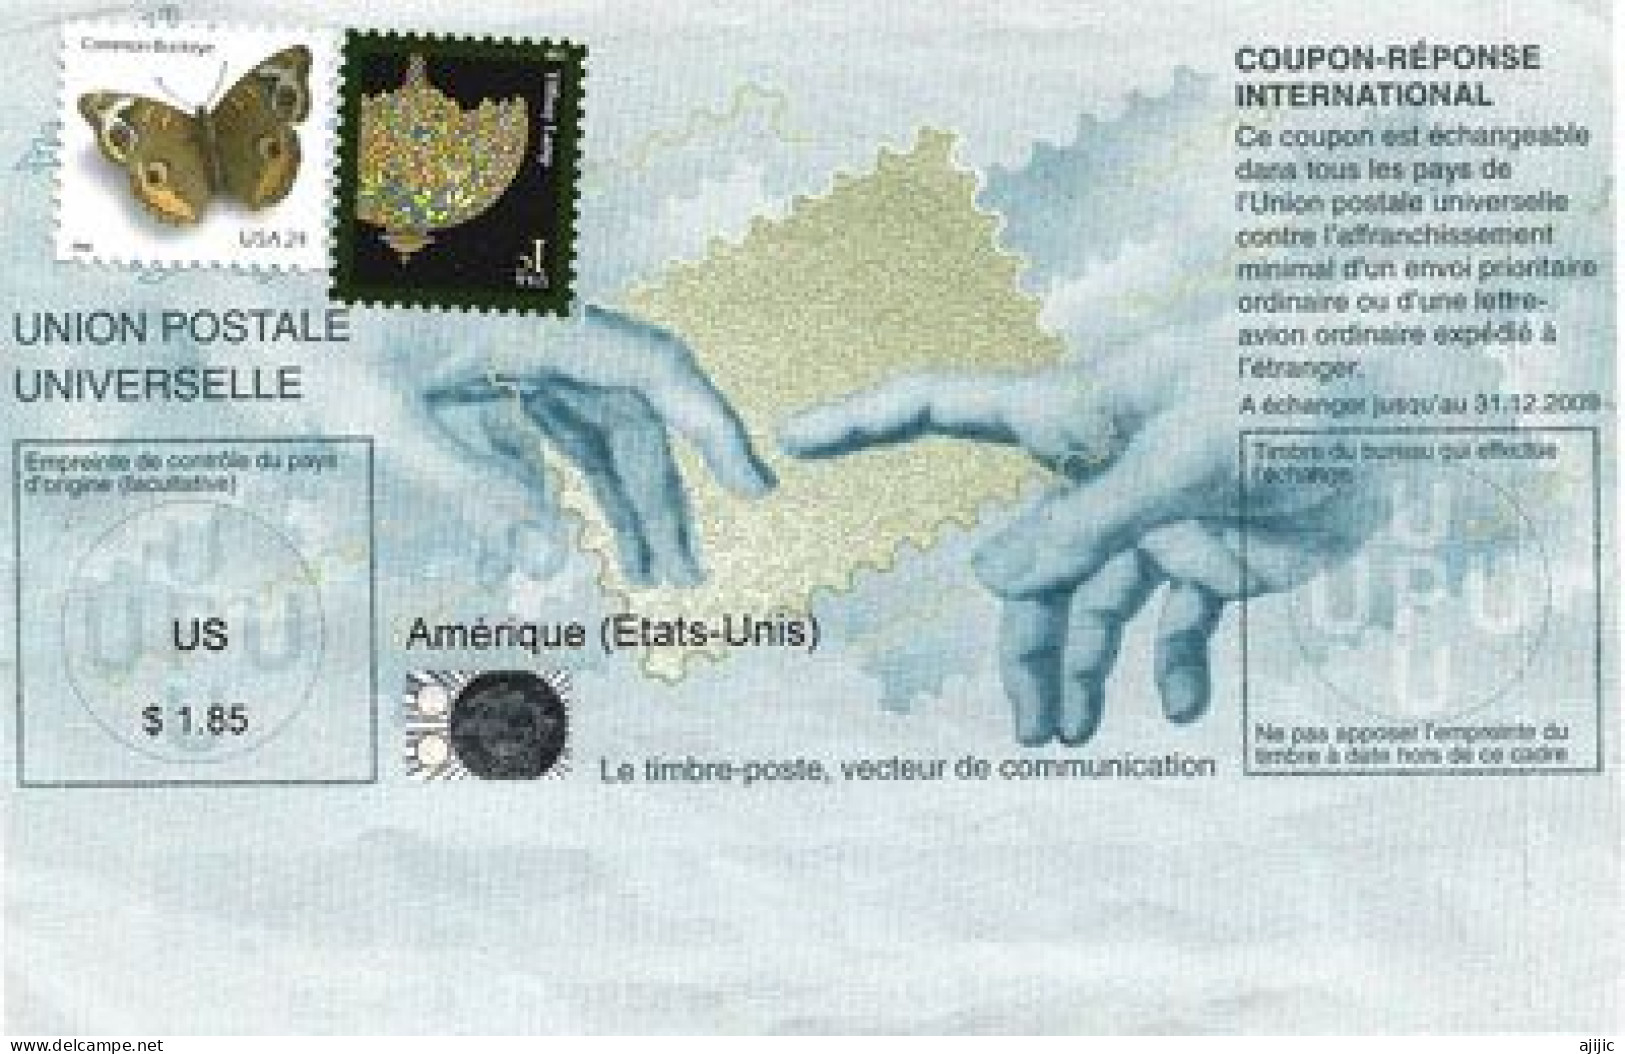 ETATS-UNIS. COUPON-REPONSE AMERICAIN 2009. IRC'S (USA) 2009 - UPU (Union Postale Universelle)